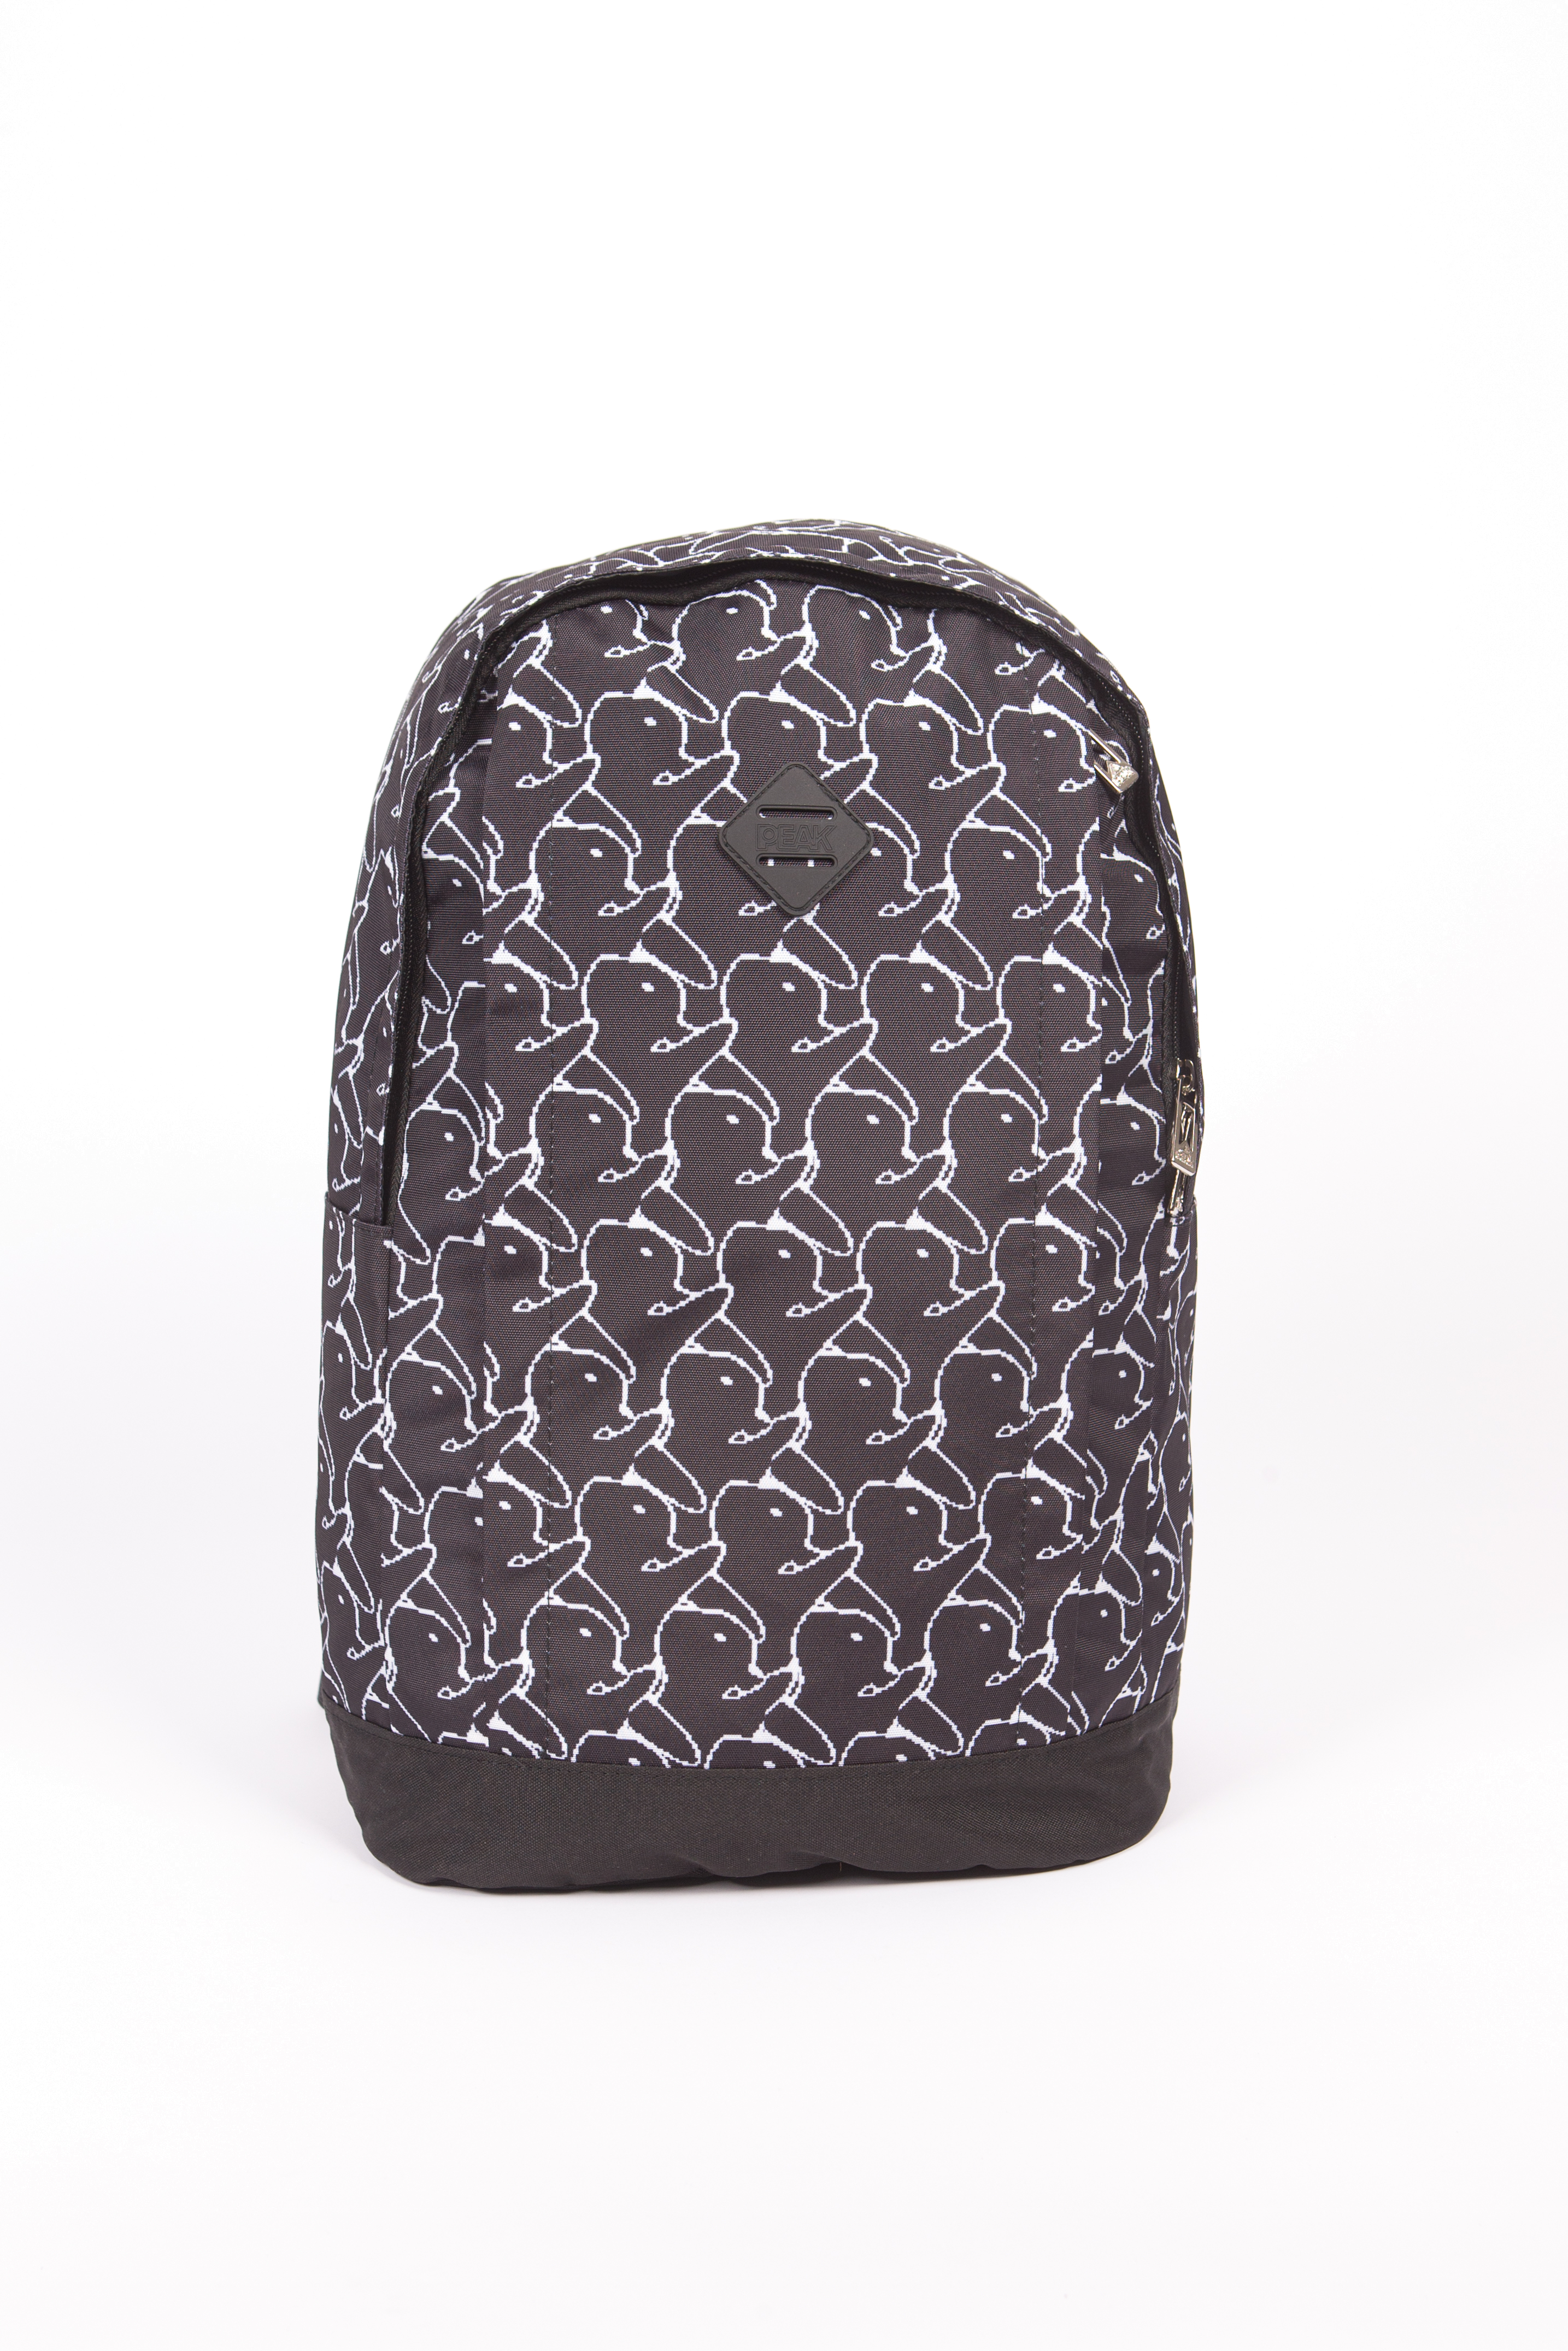 Рюкзак PEAK Backpack, черный